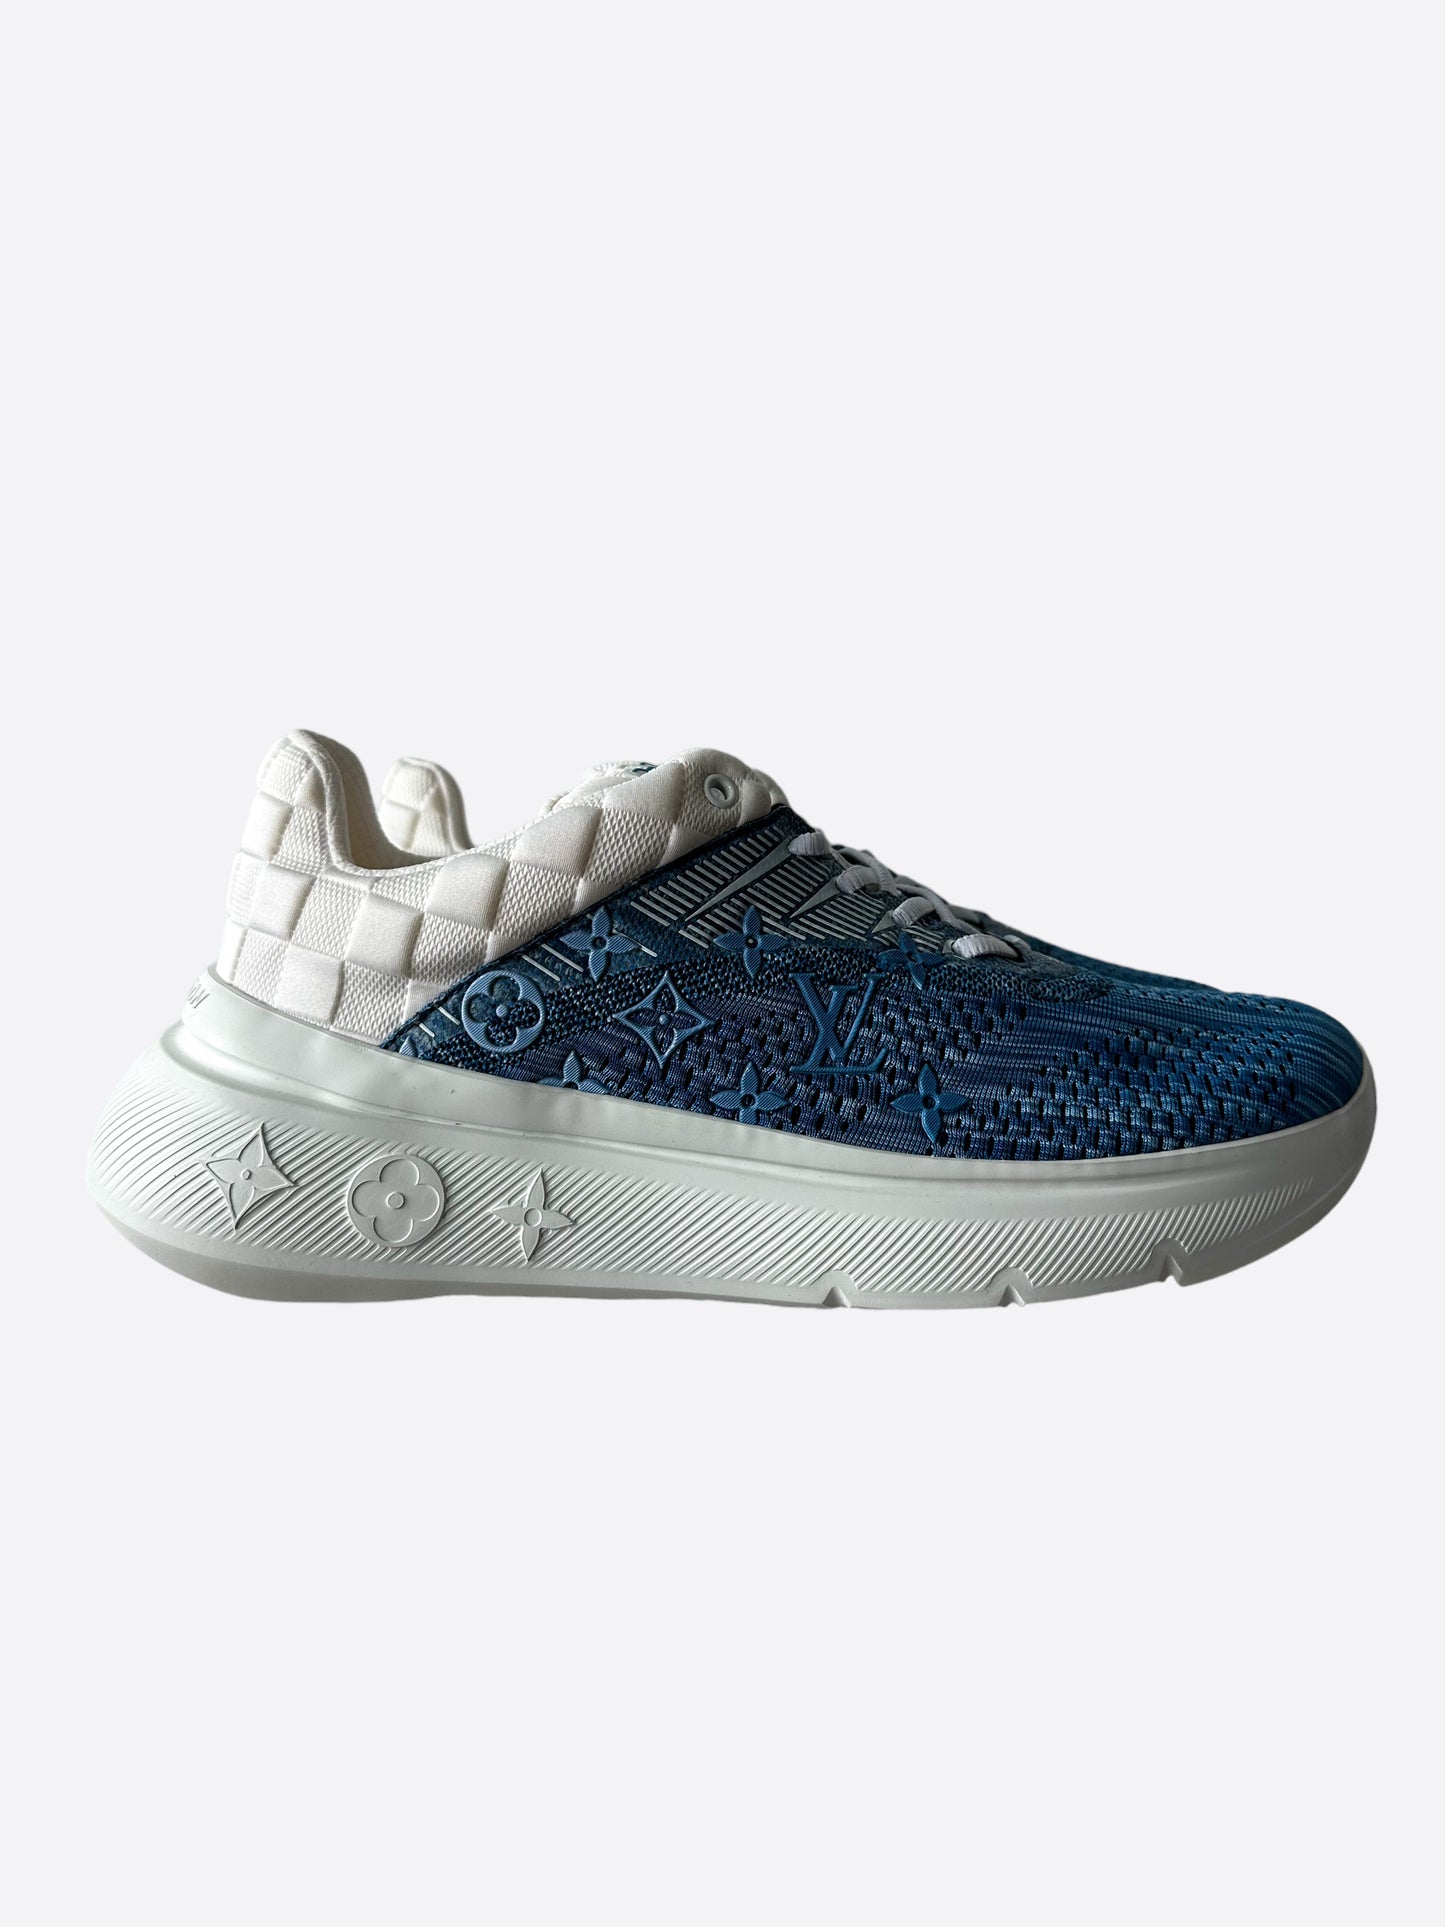 Louis Vuitton Blue & White Monogram Show Up Sneaker